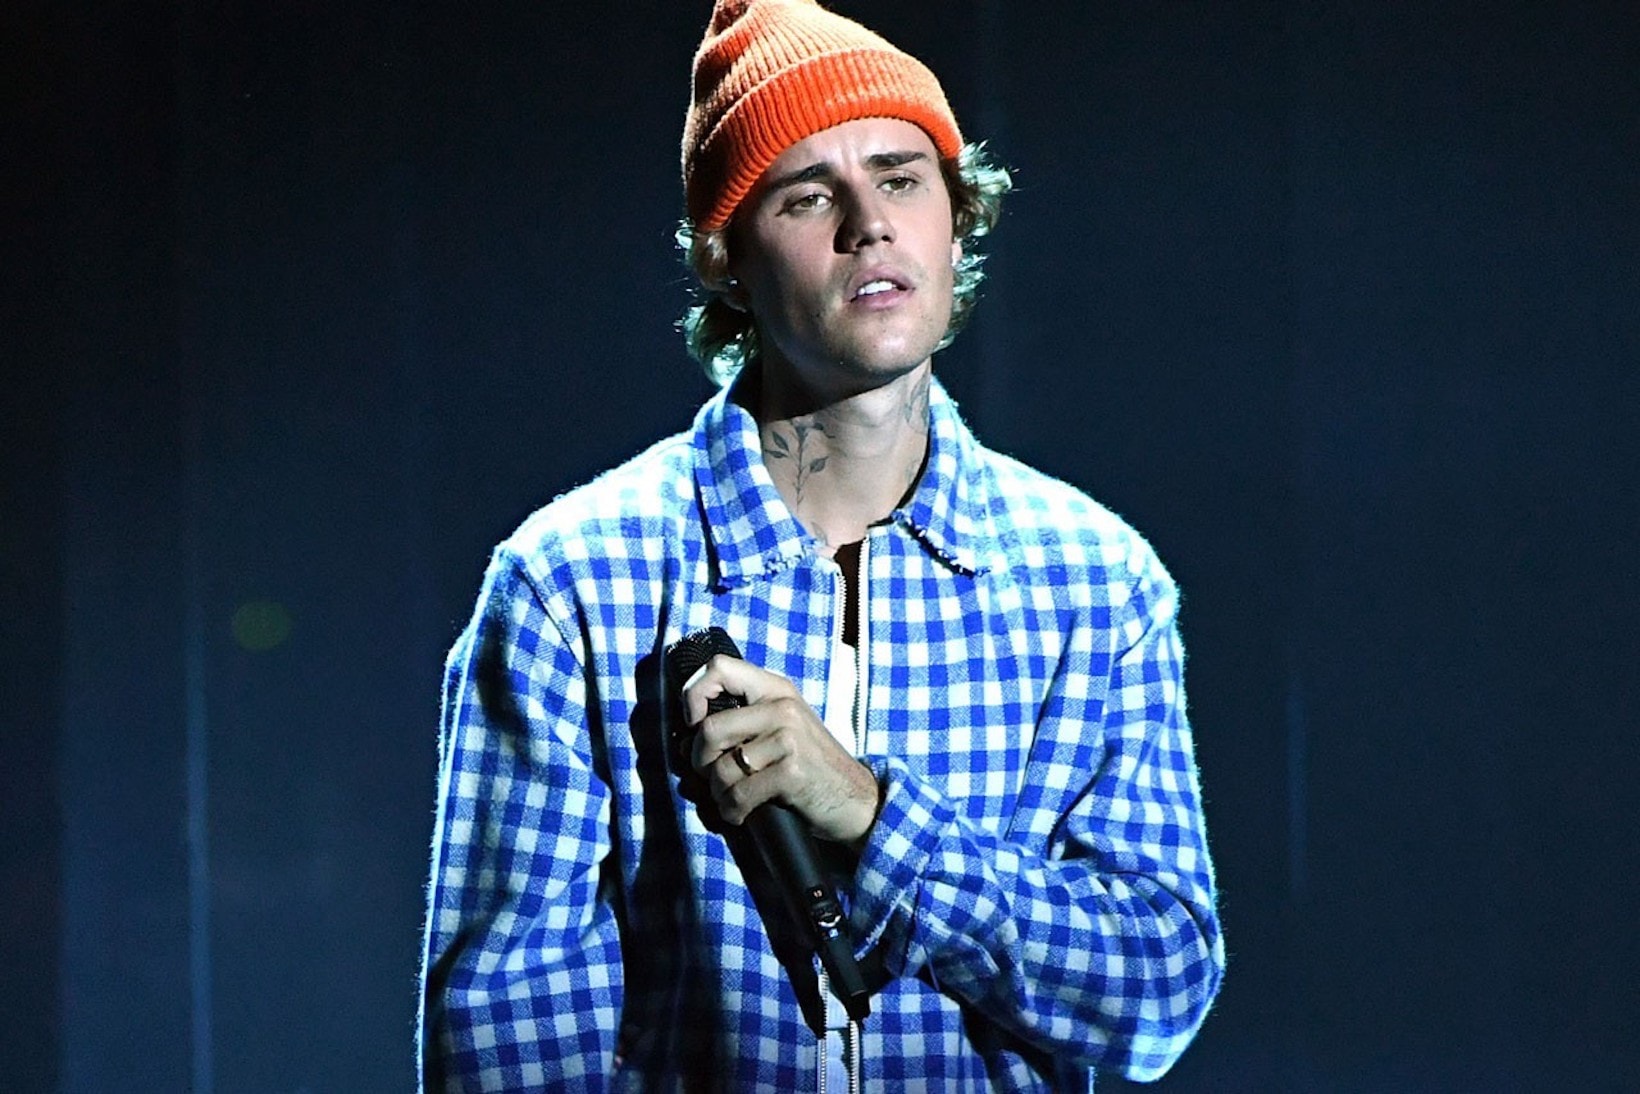 Justin Bieber Facial Paralysis Ramsay Hunt Syndrome Singer Performer Artist Musician 